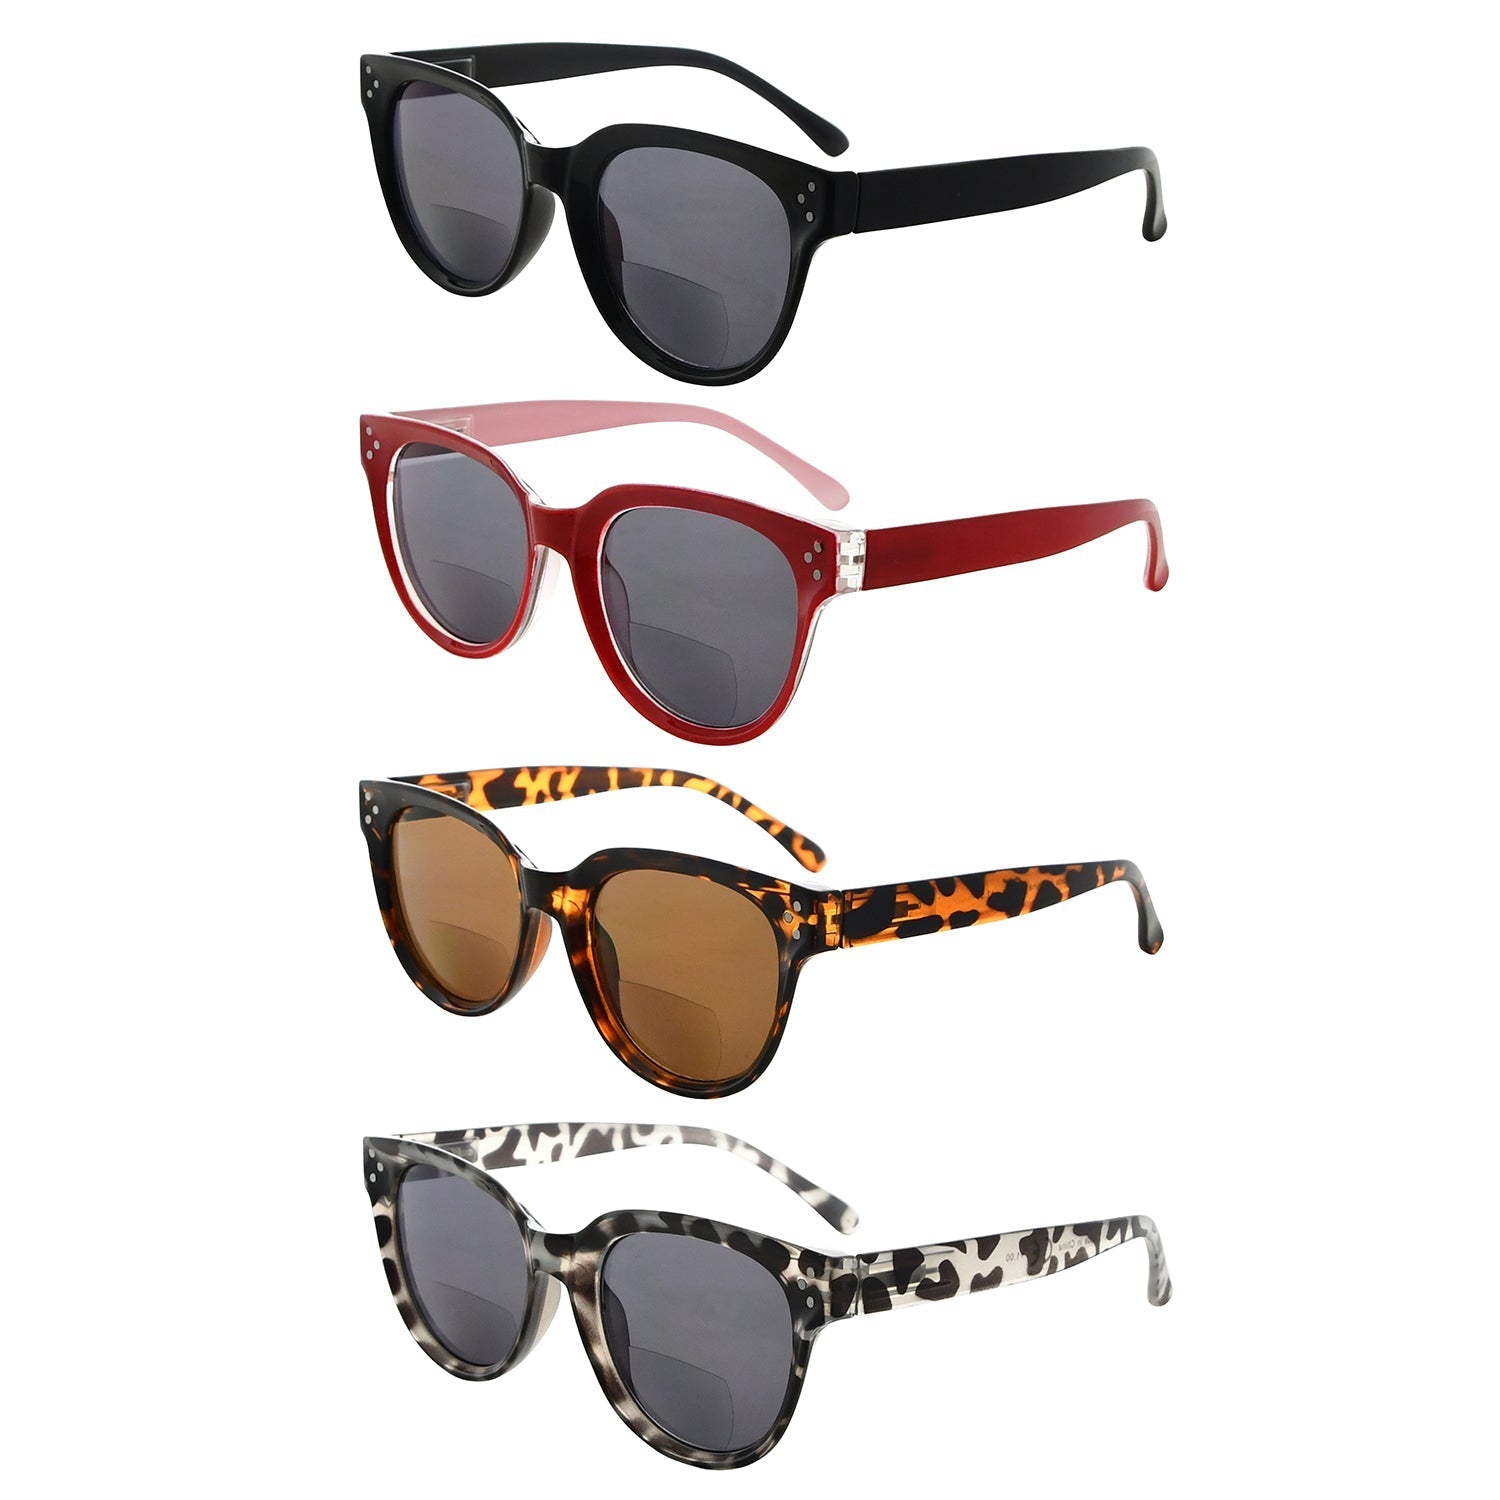 4 Pack Thicker Frame Reading Sunglasses for Women –